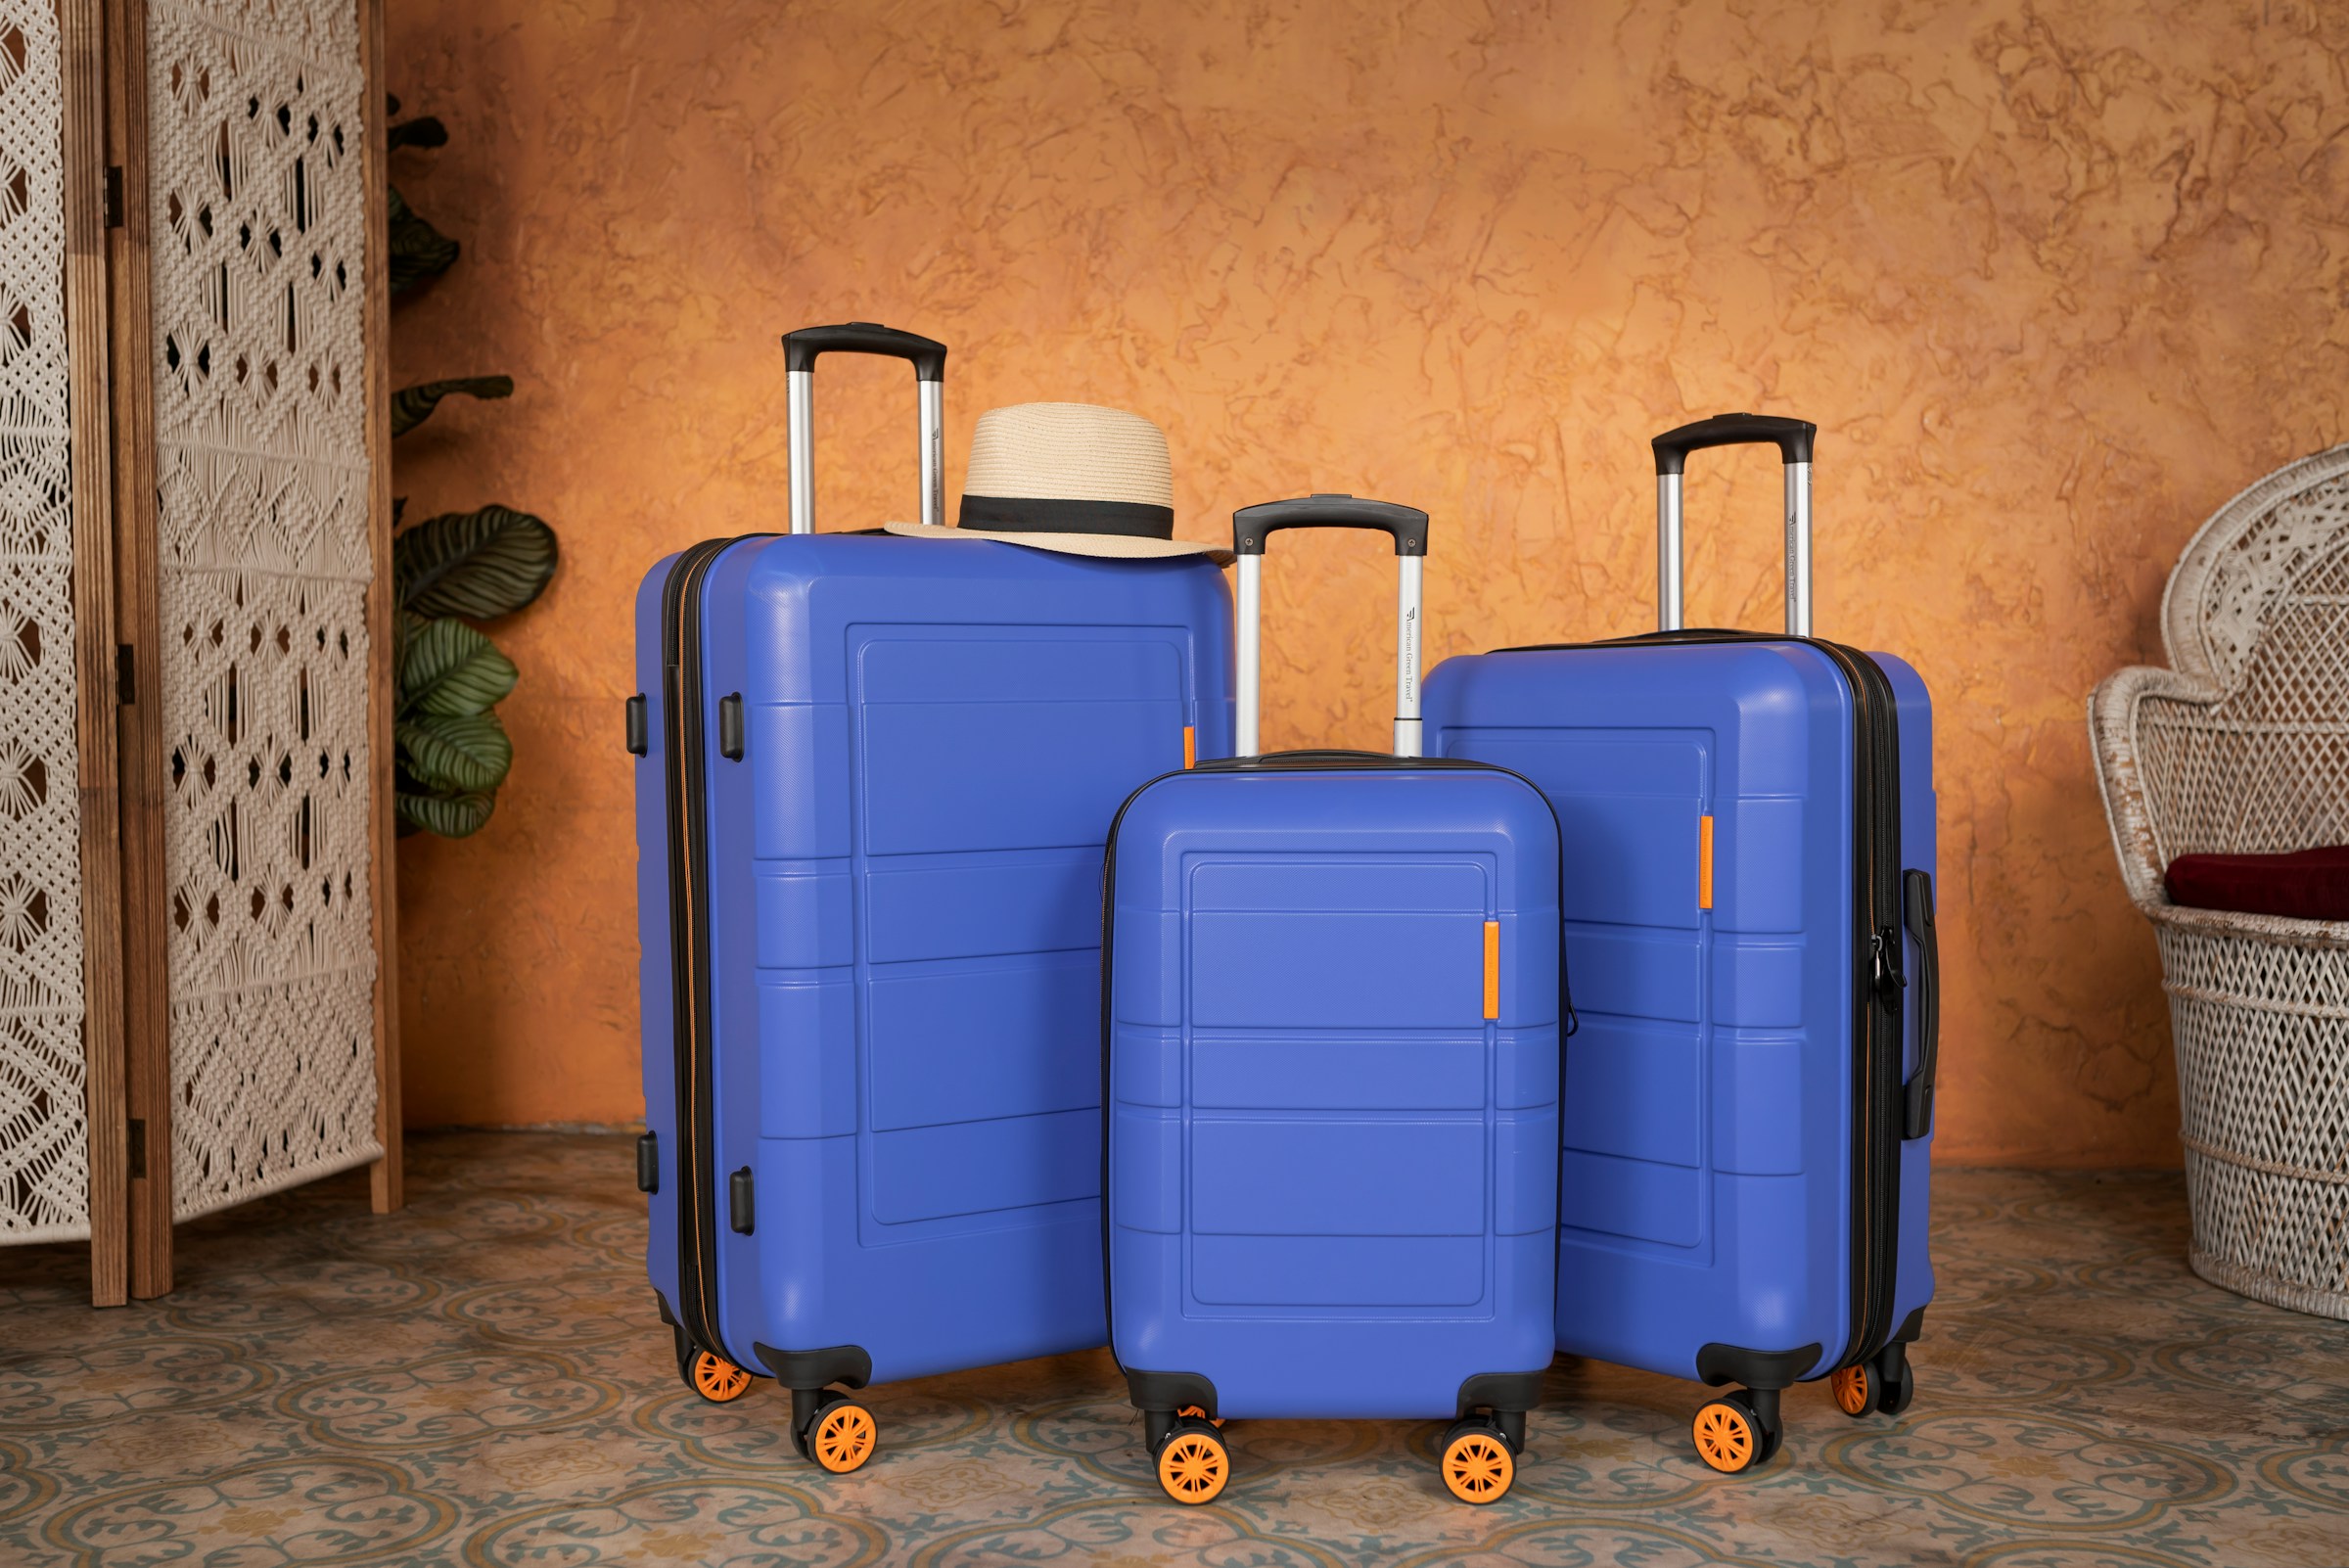 Blue suitcases lined up | Source: Unsplash